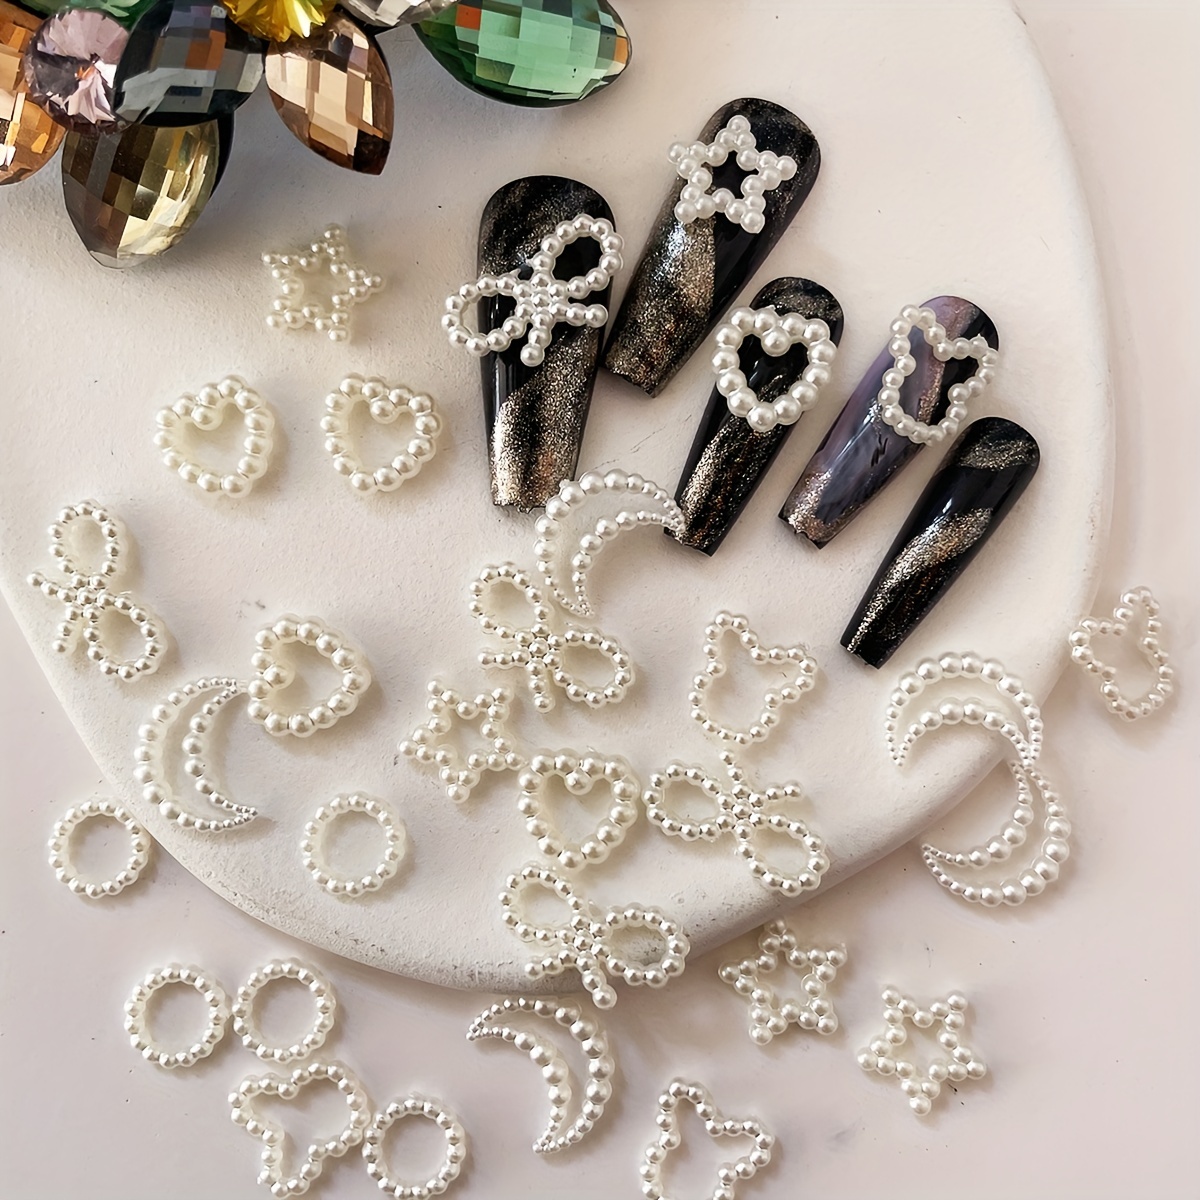 30pcs of Stylish Faux Pearl Nail Art Decorations - Bows, Stars & Moons!